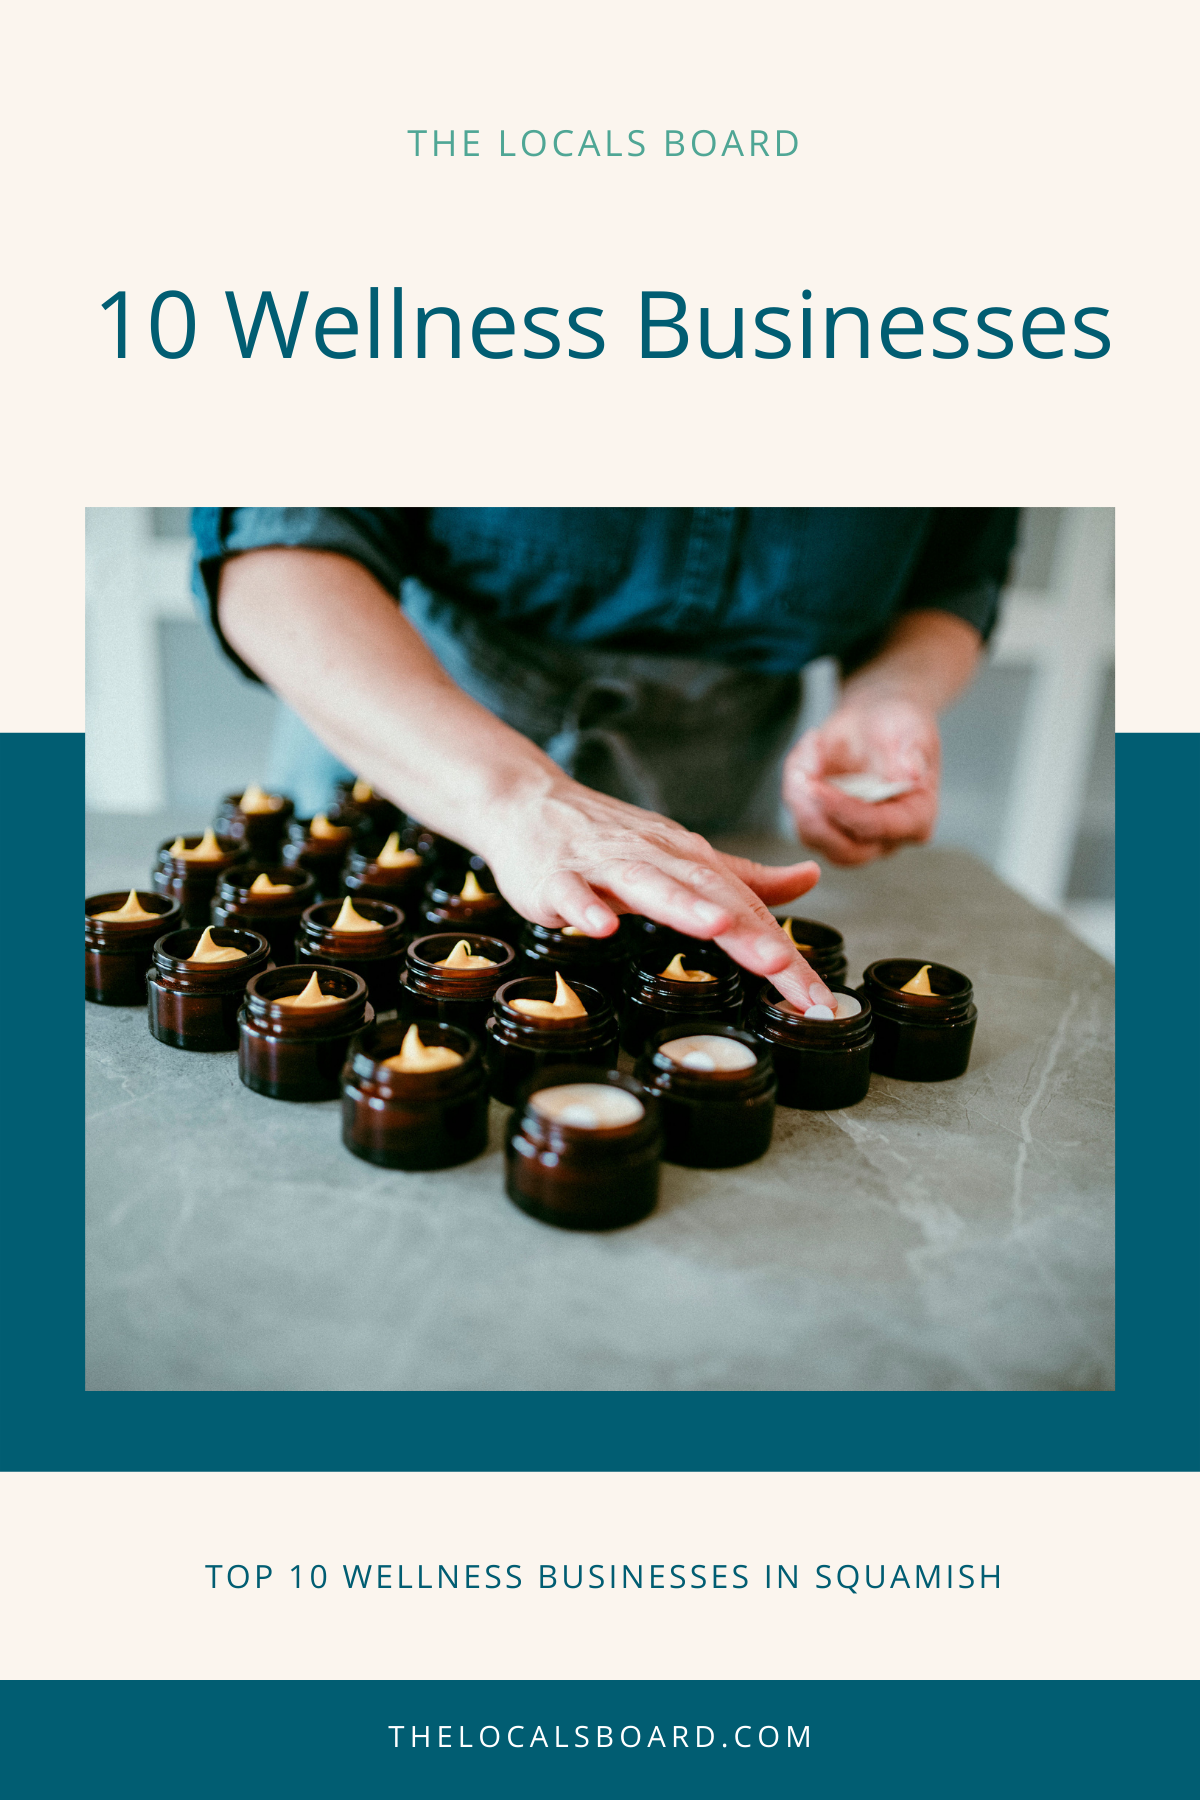 10 Wellness Business Squamish Whistler